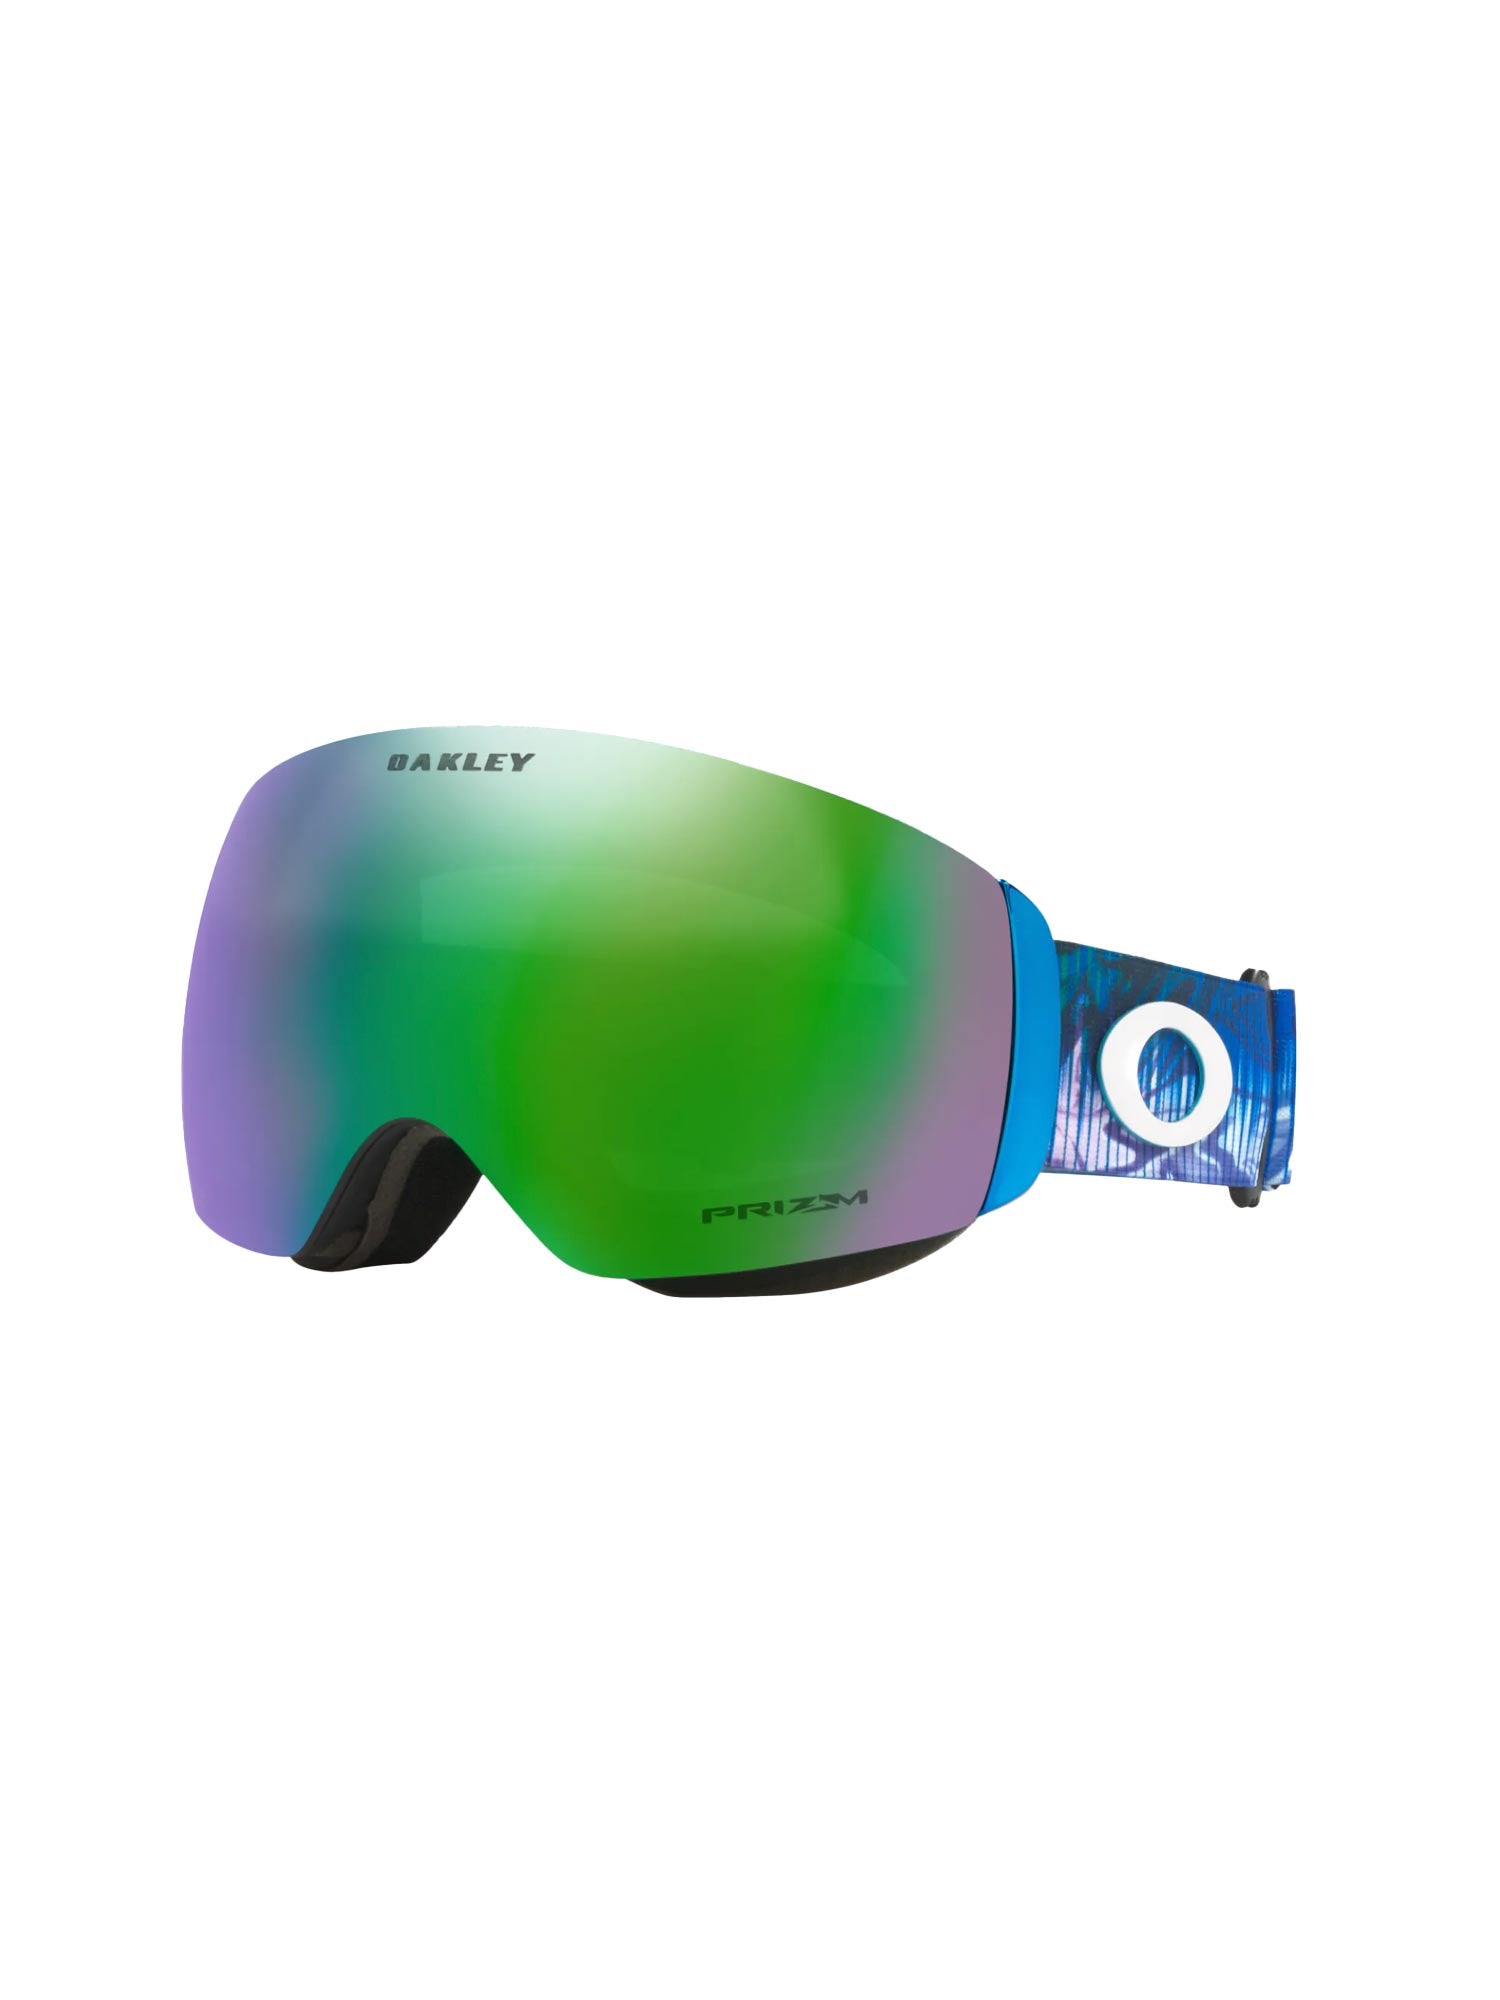 Oakley Flight Deck M ski/snowboard goggles, jade lens